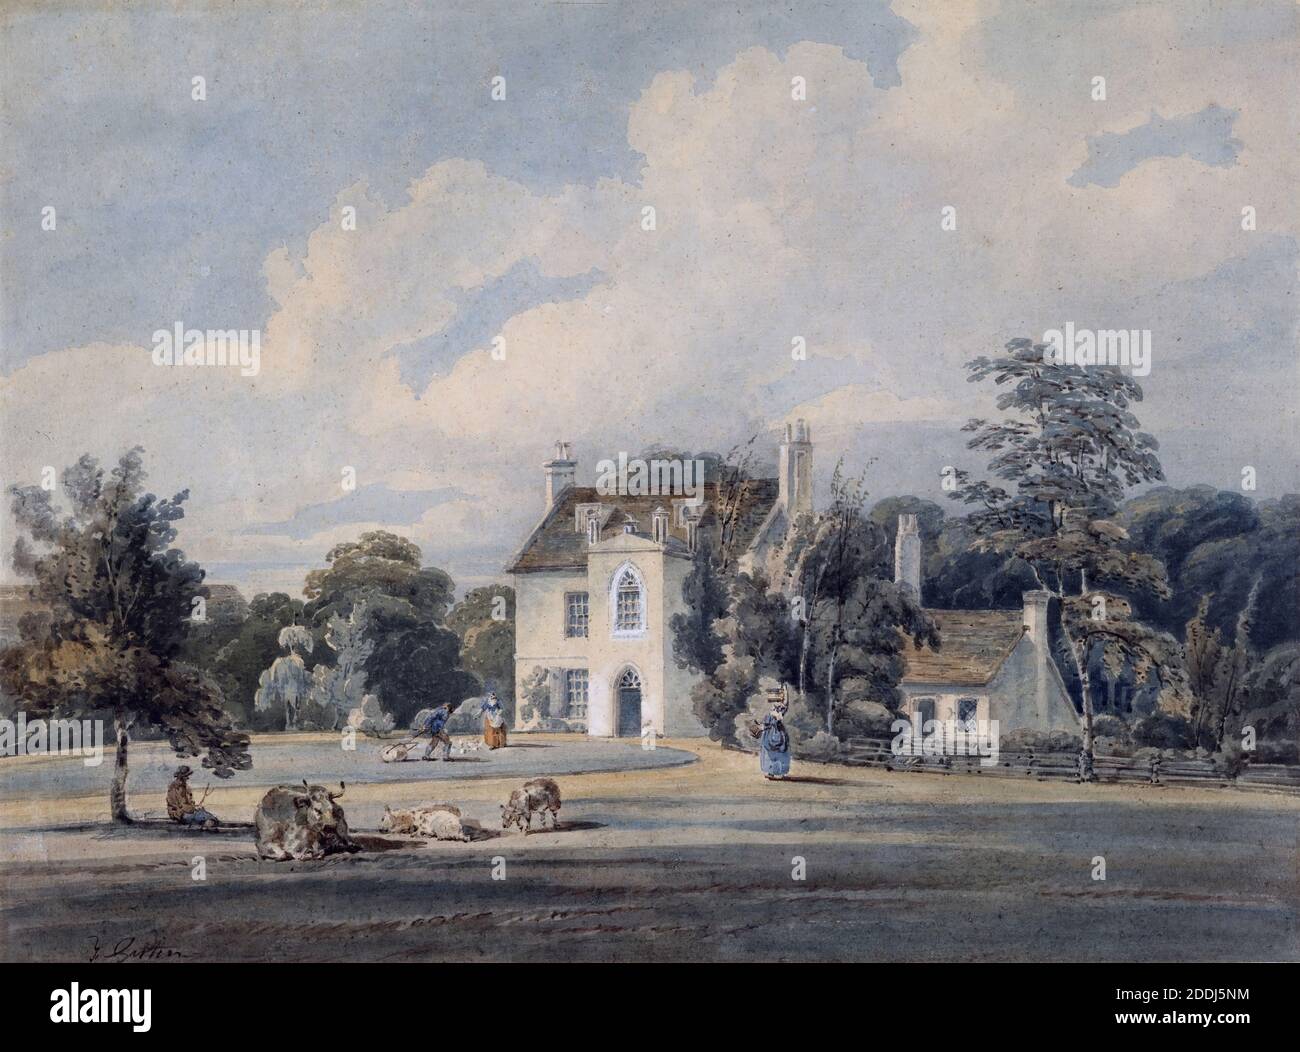 Chalfont Lodge, Buckinghamshire, 1795-96 Thomas Girtin, Landschaft, Aquarell, England, Tier, Kuh, Land, Architektur, Haus Stockfoto